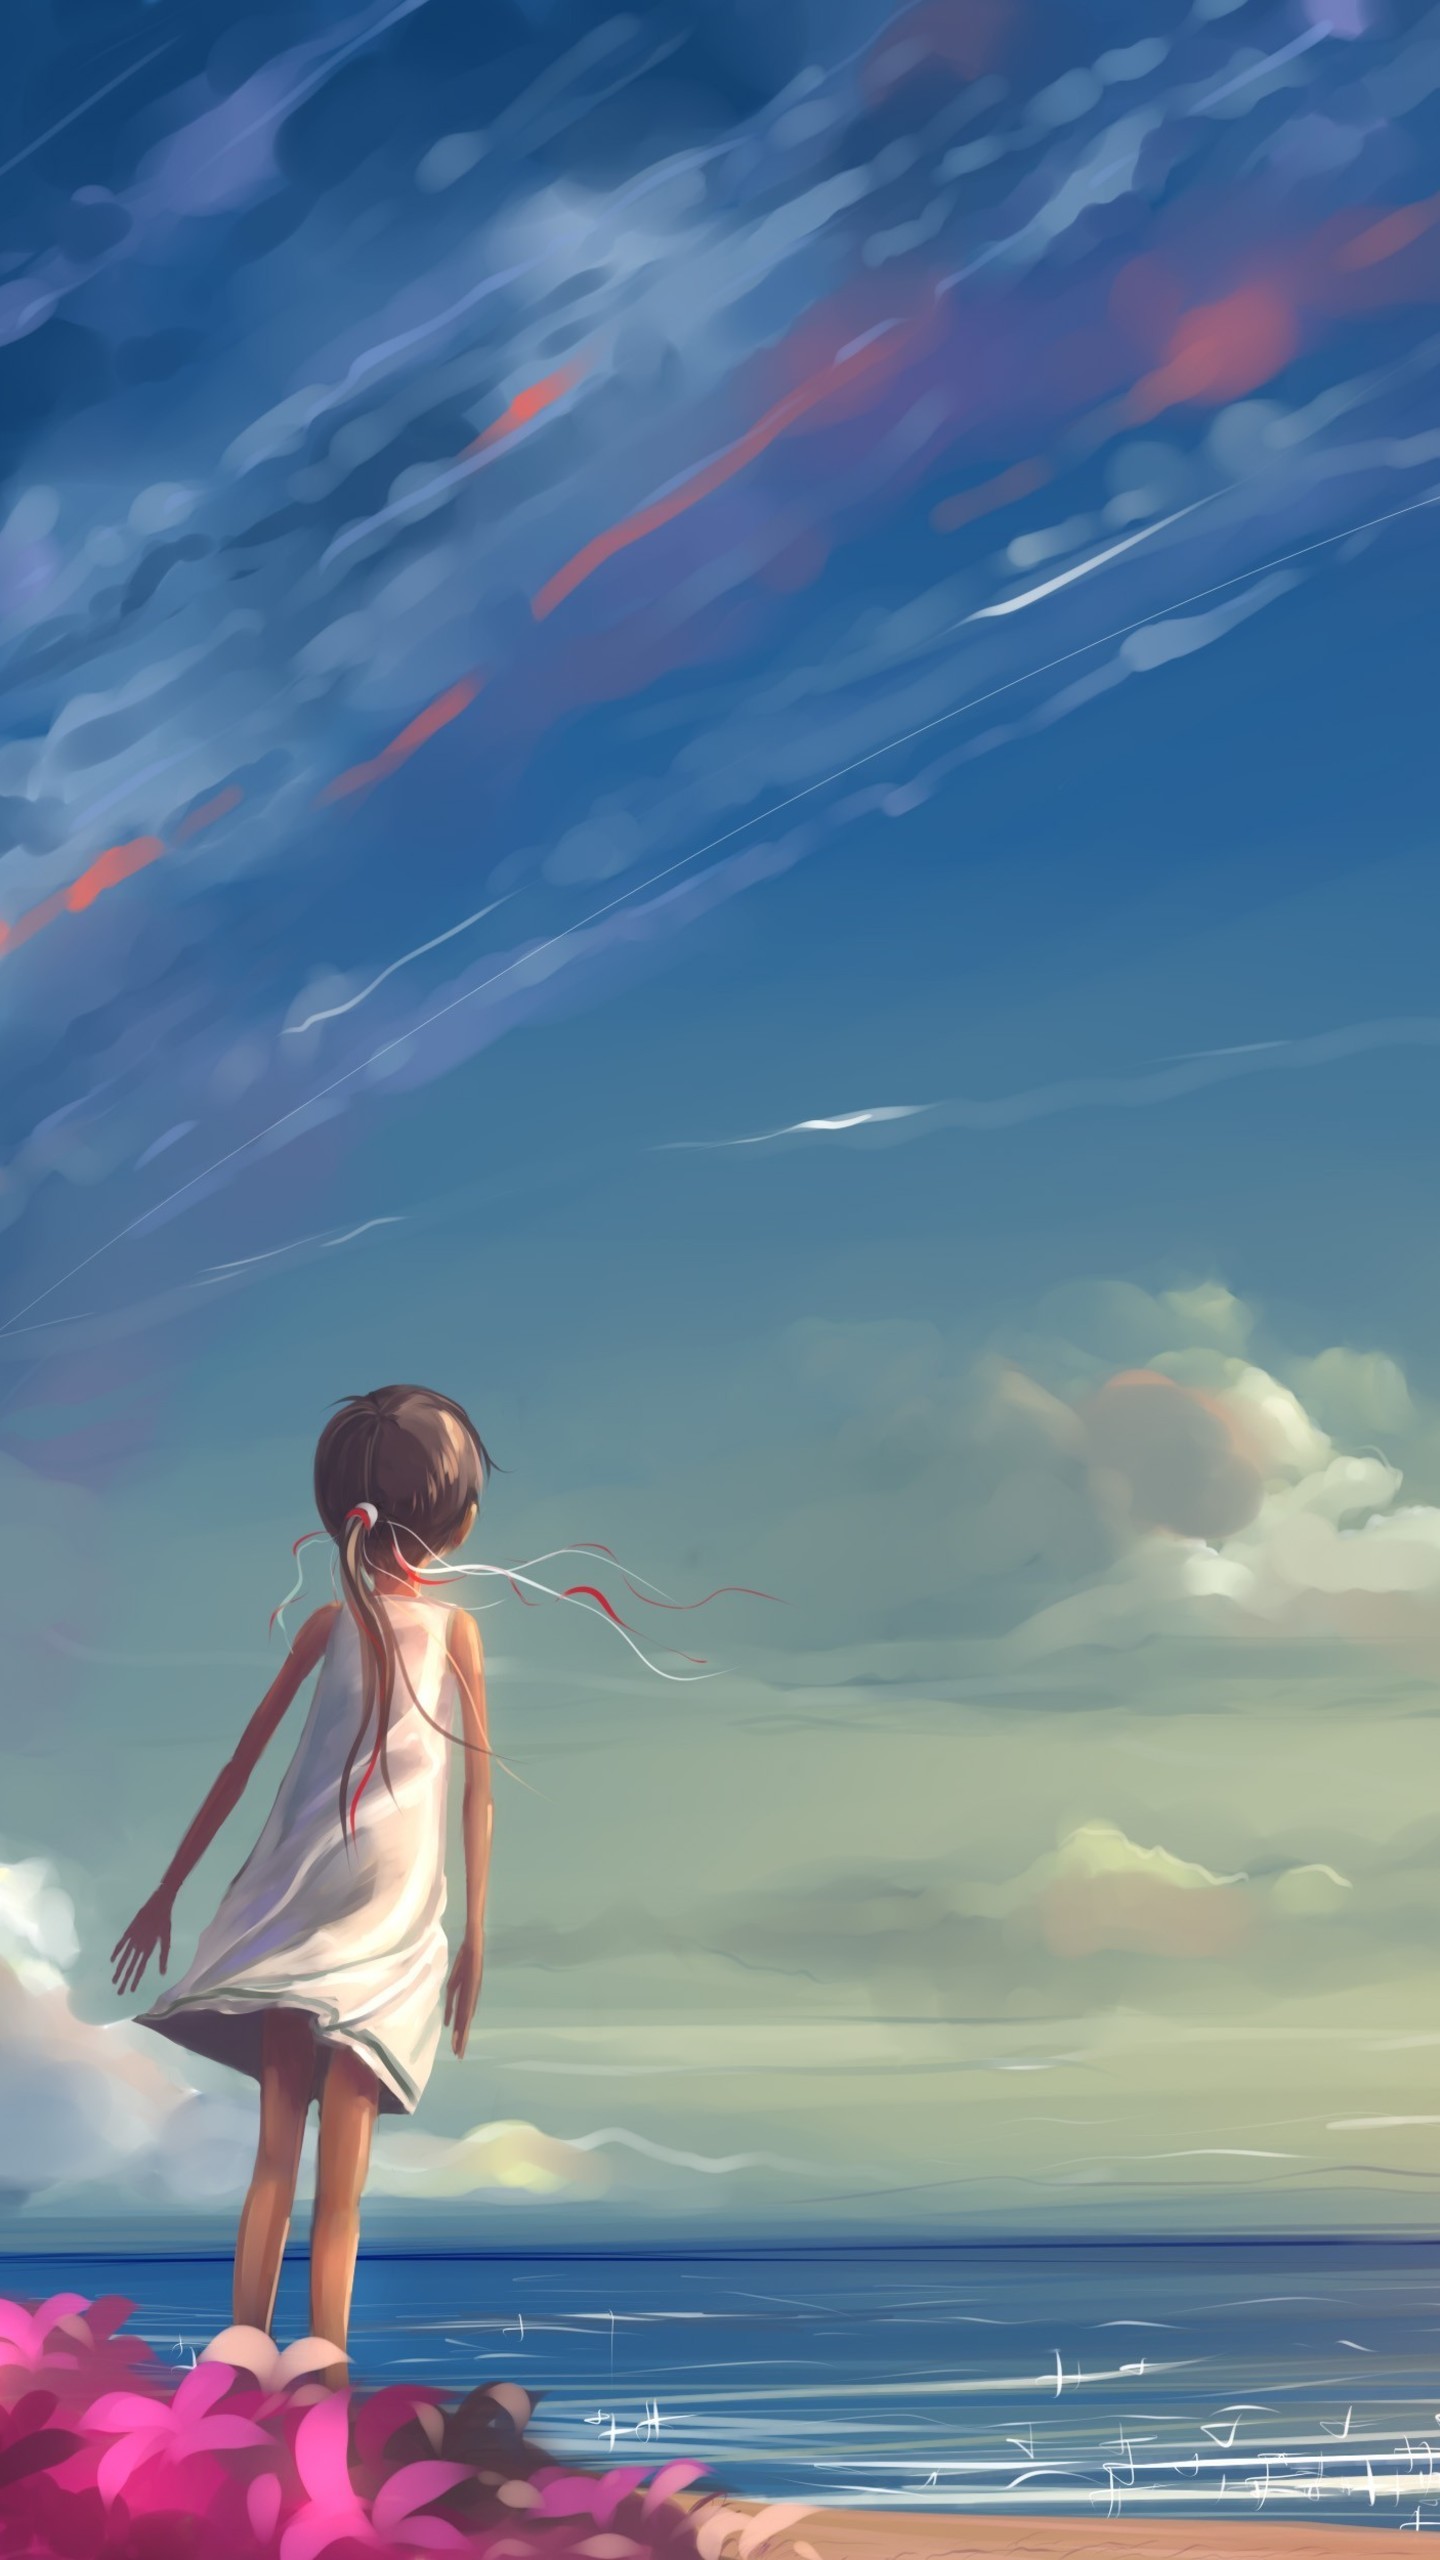 1440x2560 little-girl-looking-at-kite-artwork-landscape-4k-